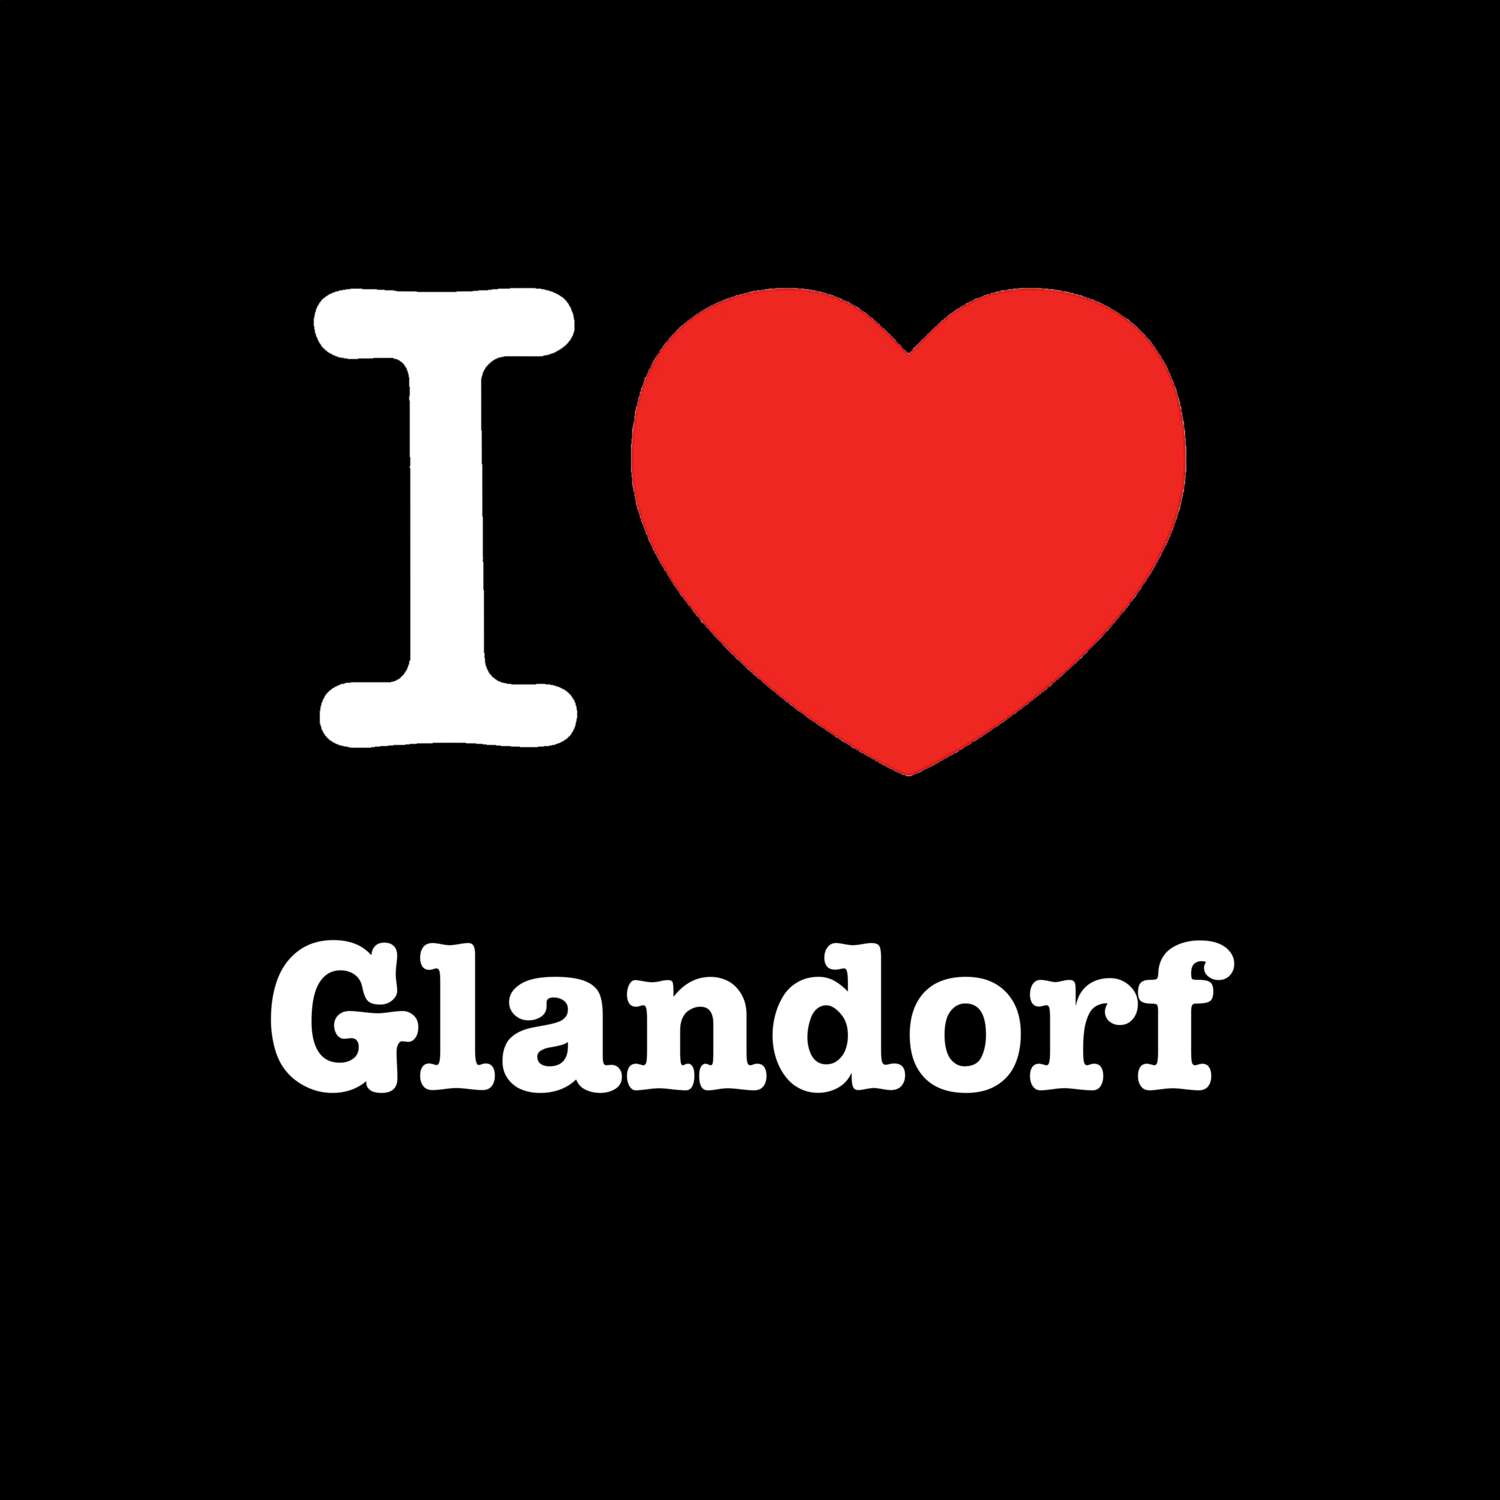 Glandorf T-Shirt »I love«